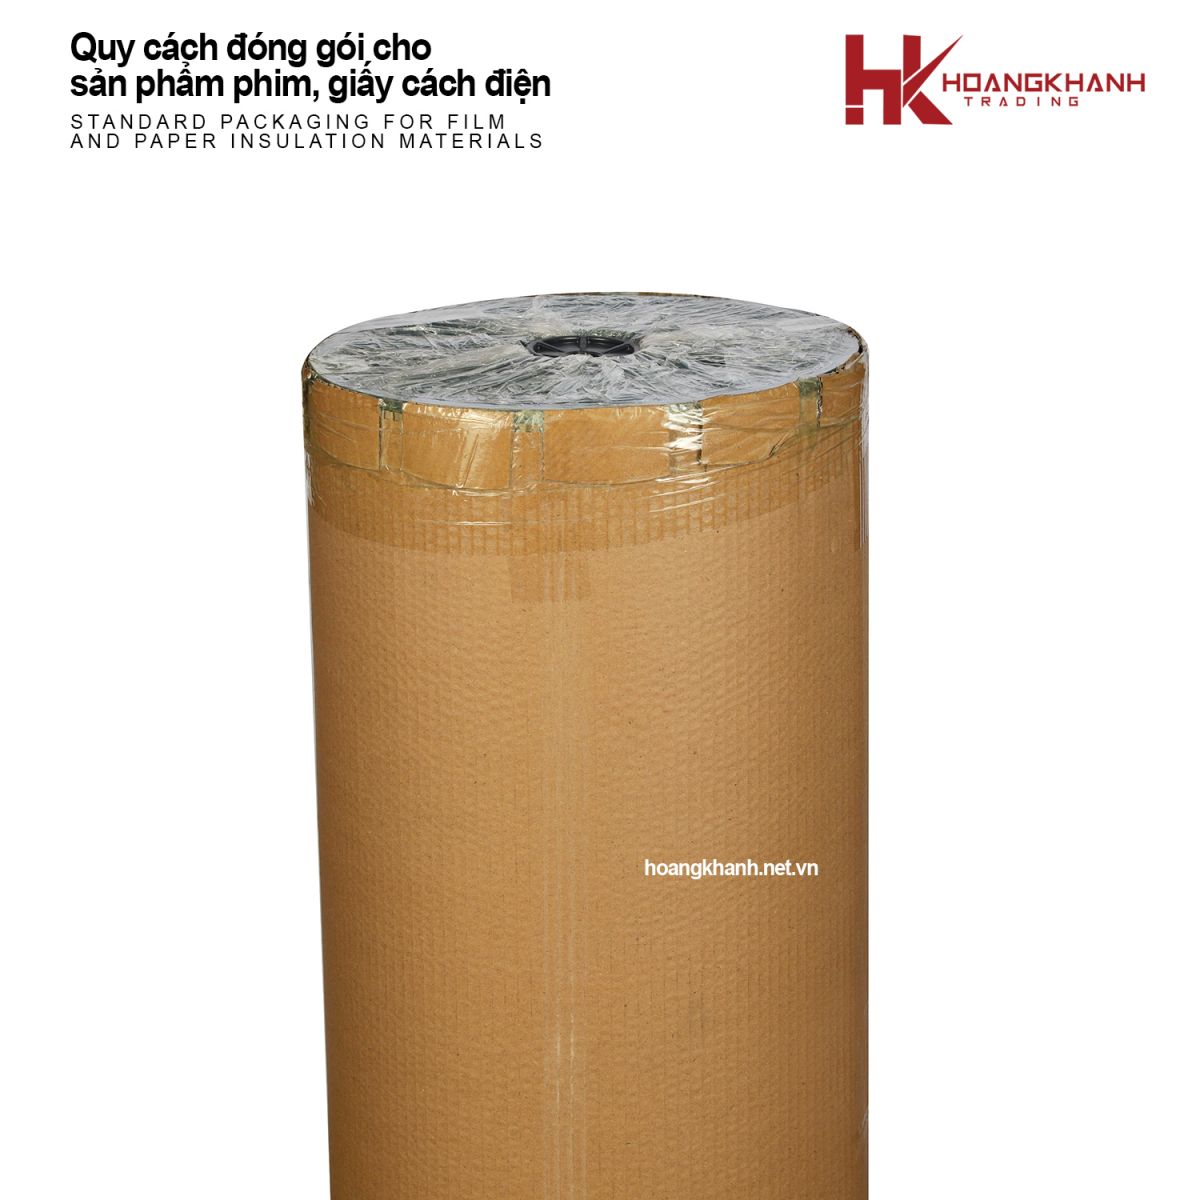 6632 DM Polyester Film Insulation